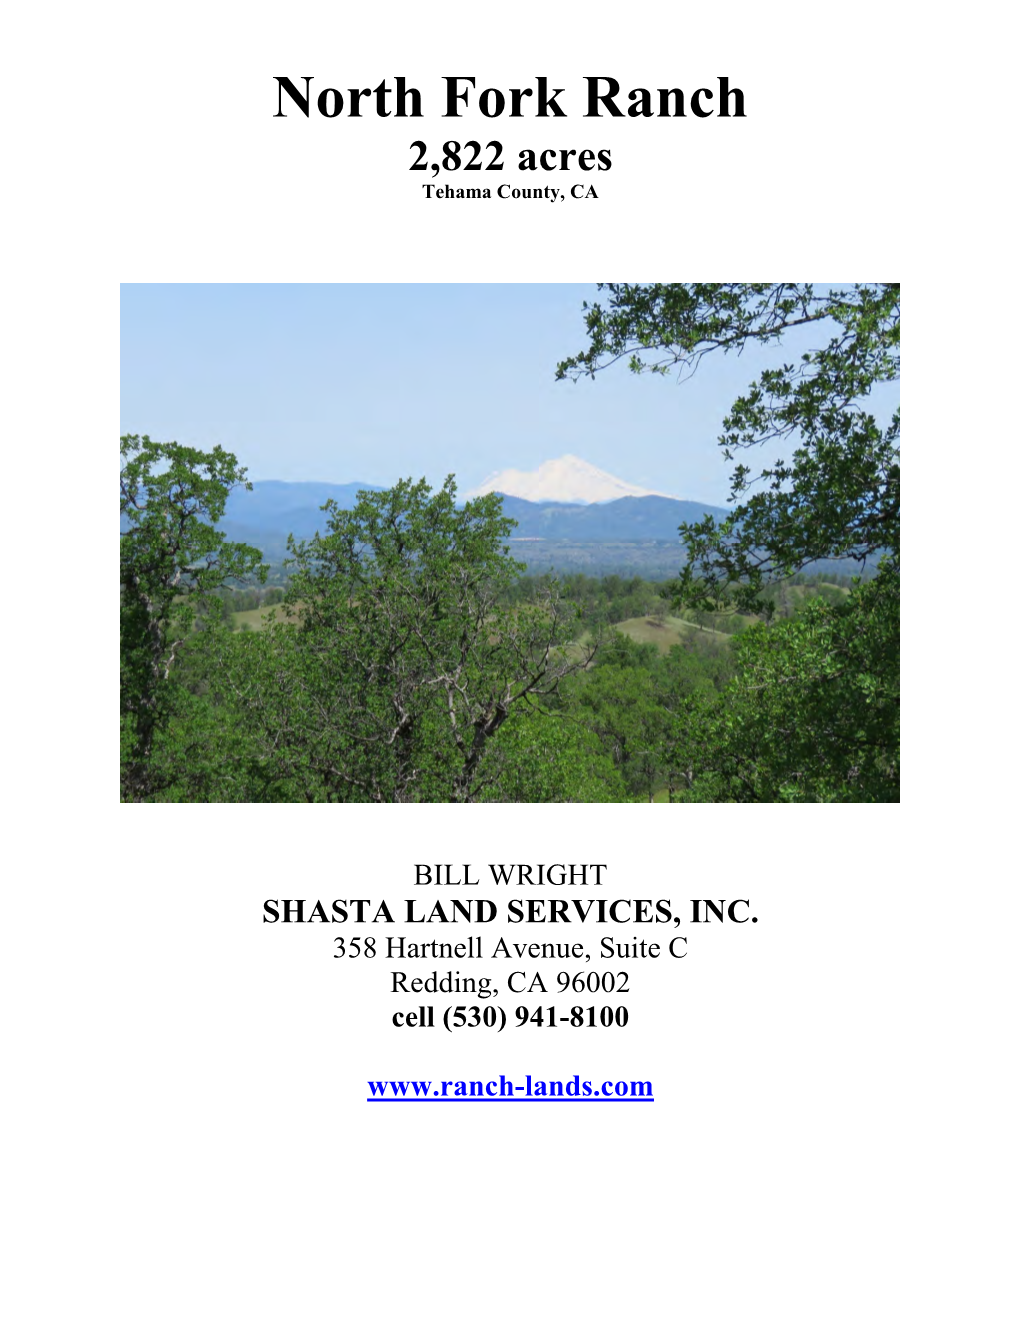 North Fork Ranch 2,822 Acres Tehama County, CA